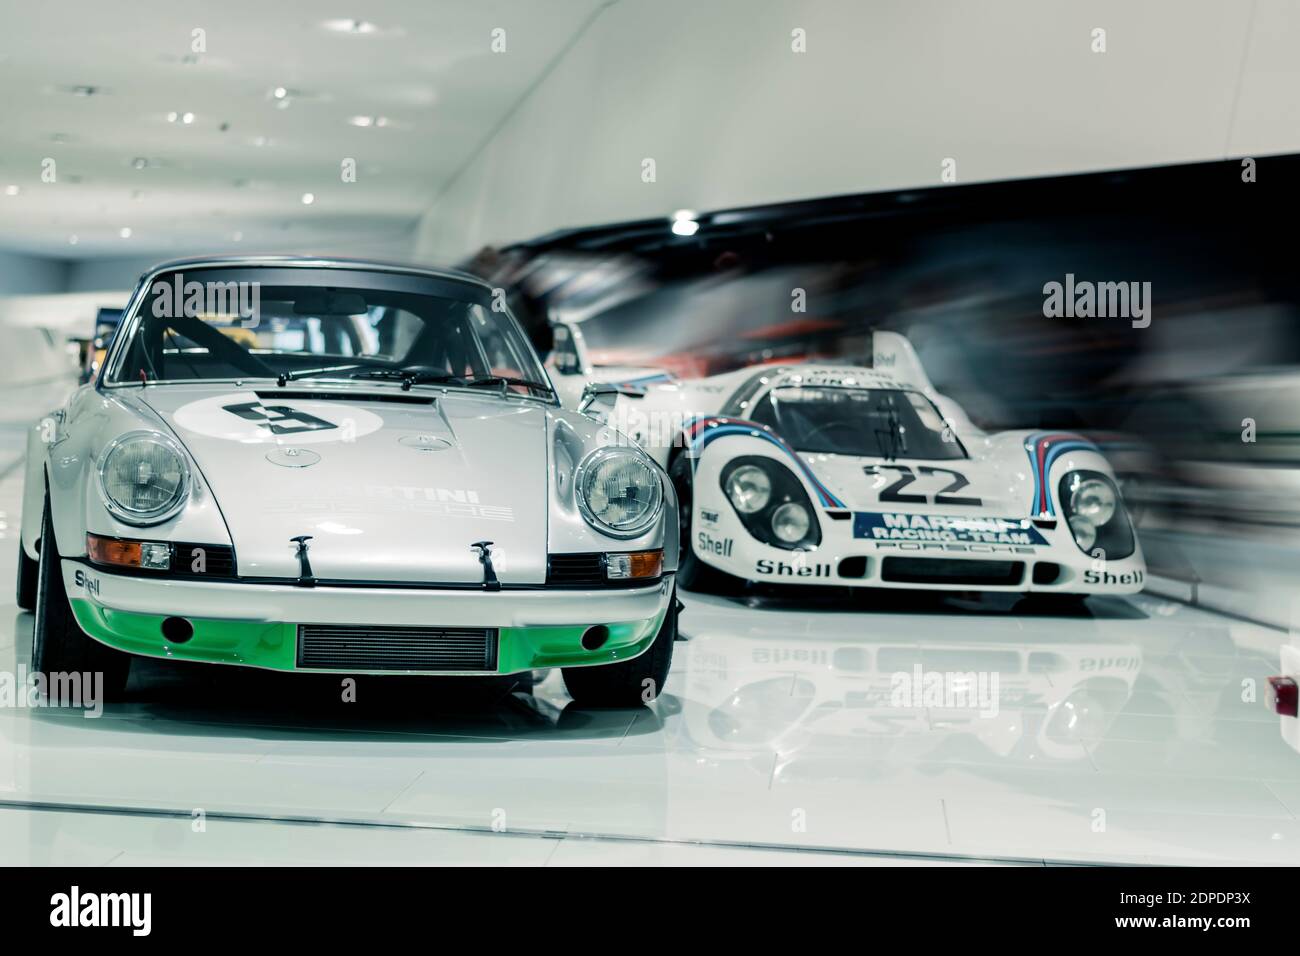 STUTTGART, Germany 6 March 2020: The Porsche 911 Carrera RSR 1973 №9 in Porsche Museum. Stock Photo